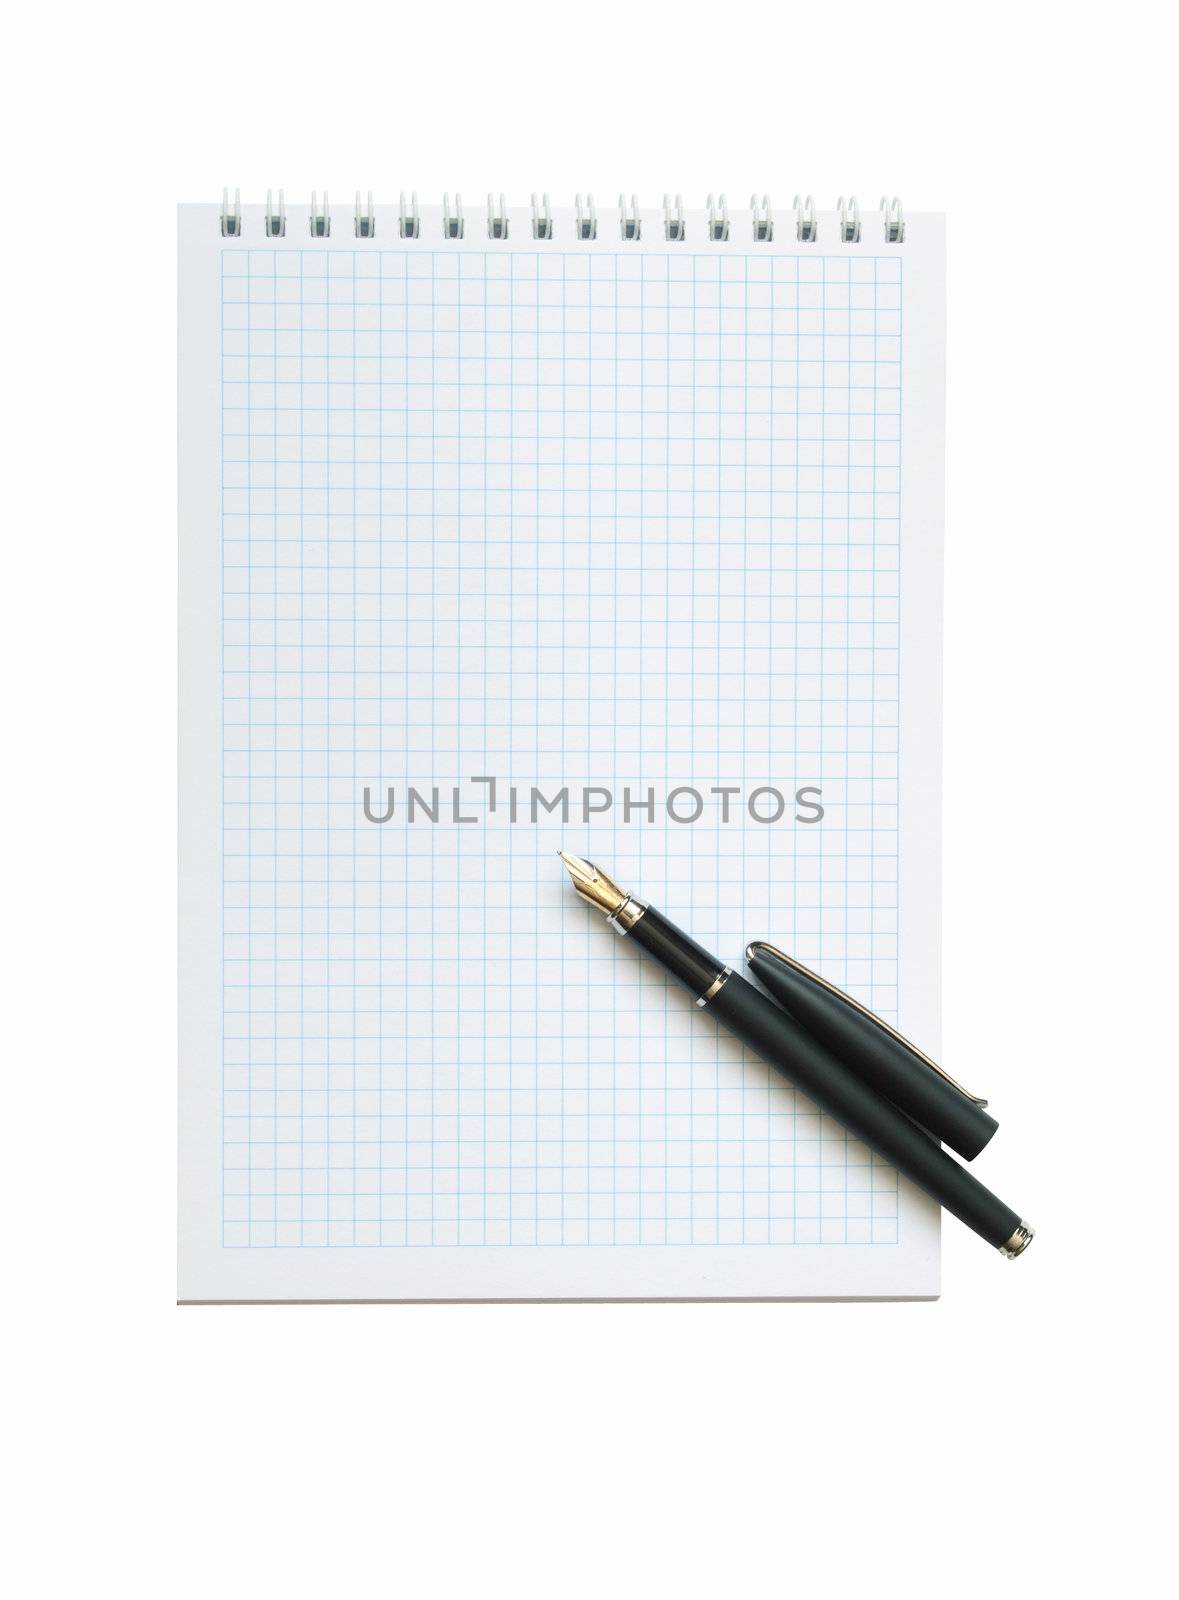 Spiral Notebook And Pen by kvkirillov